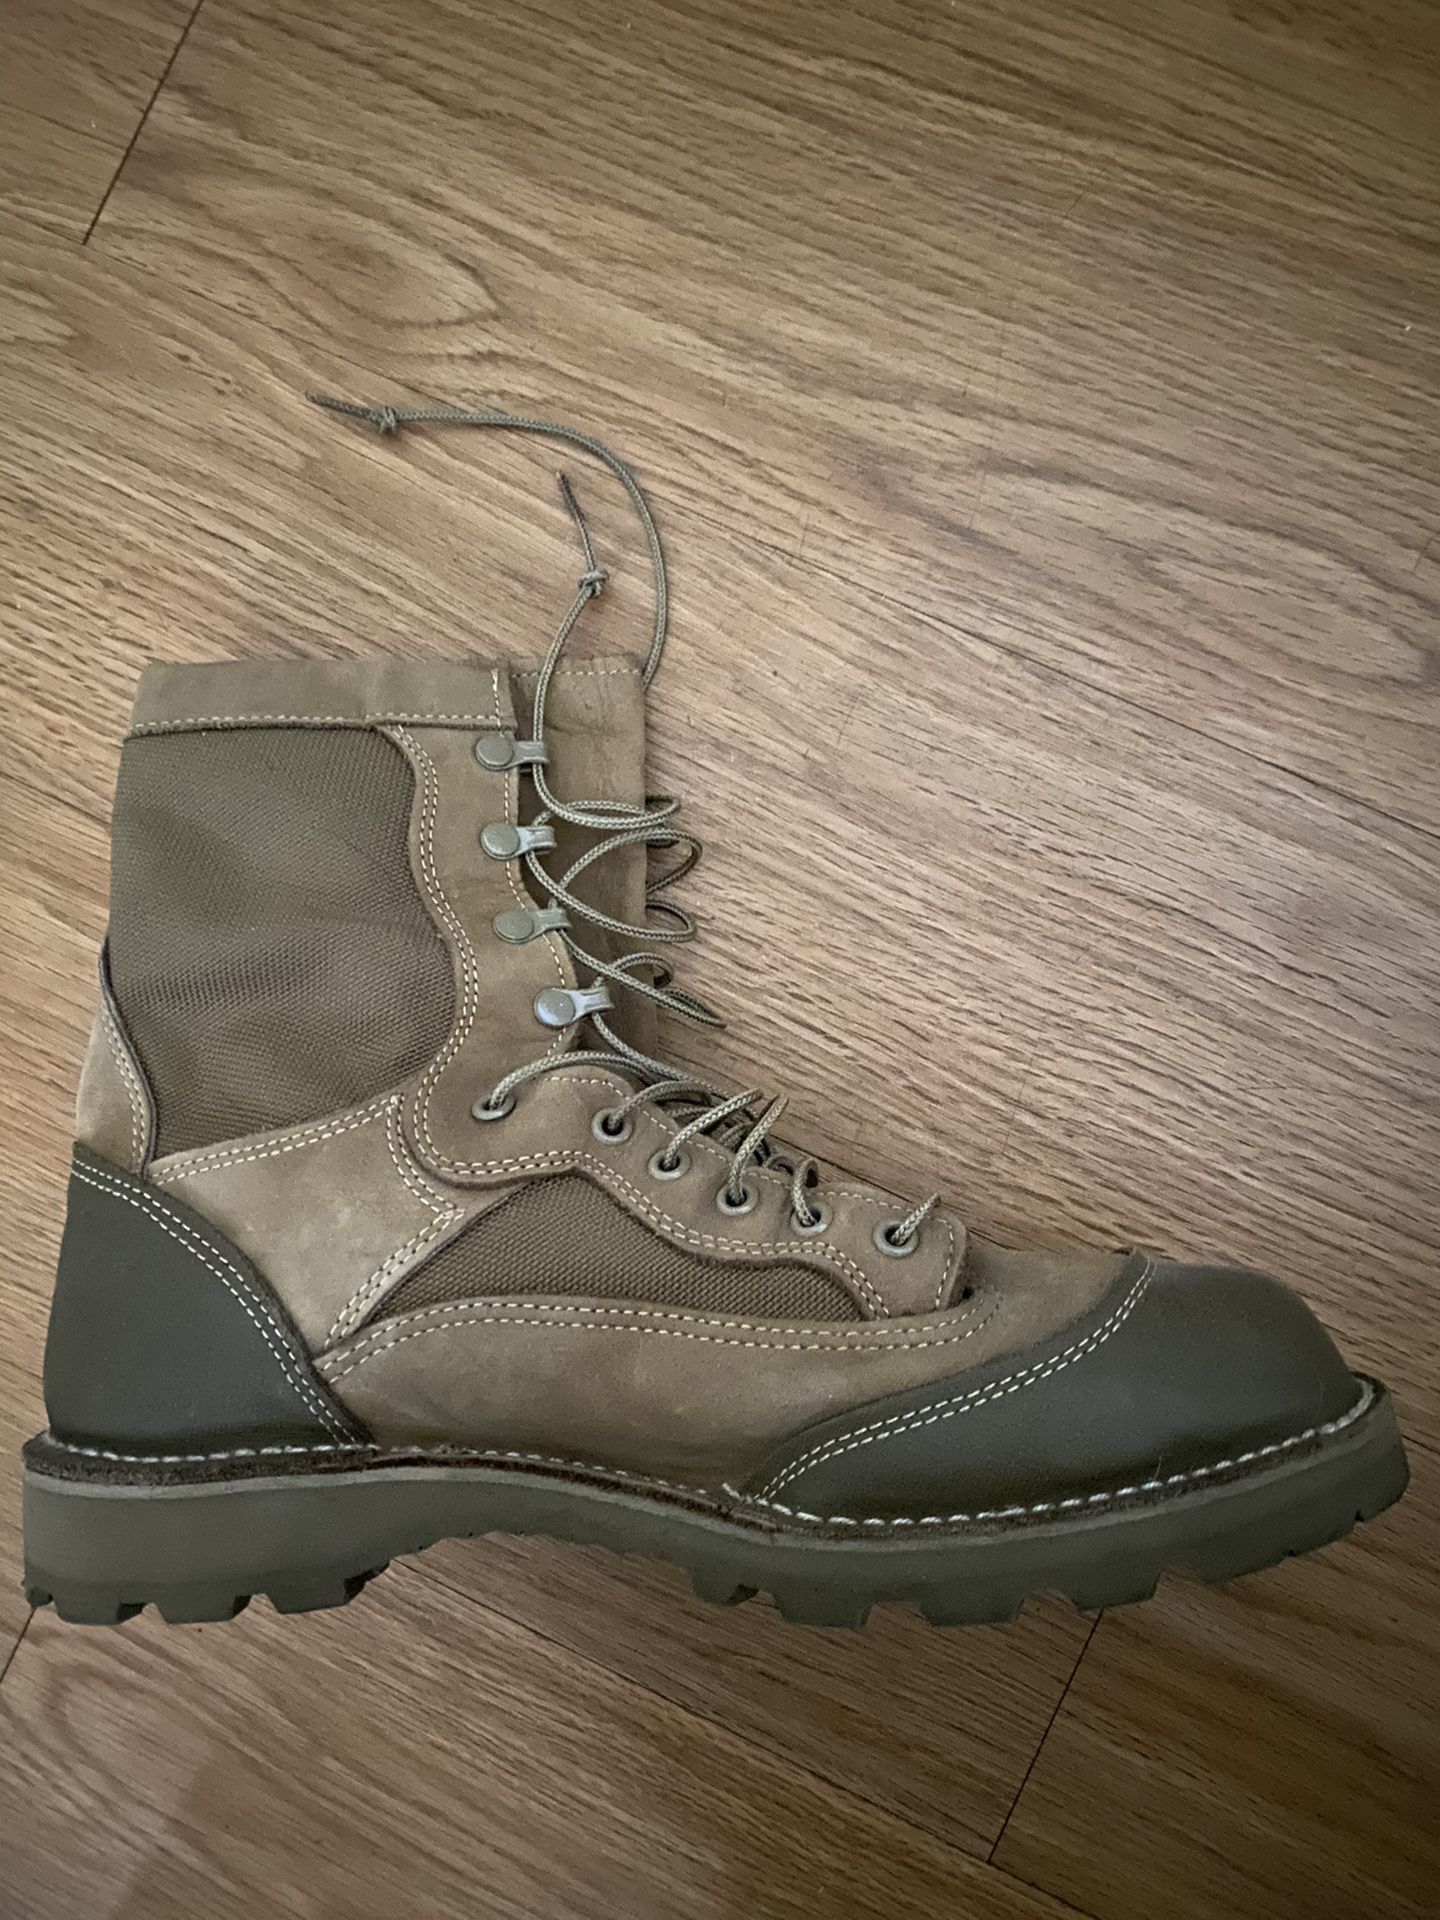 Wellco 11R USMC boots